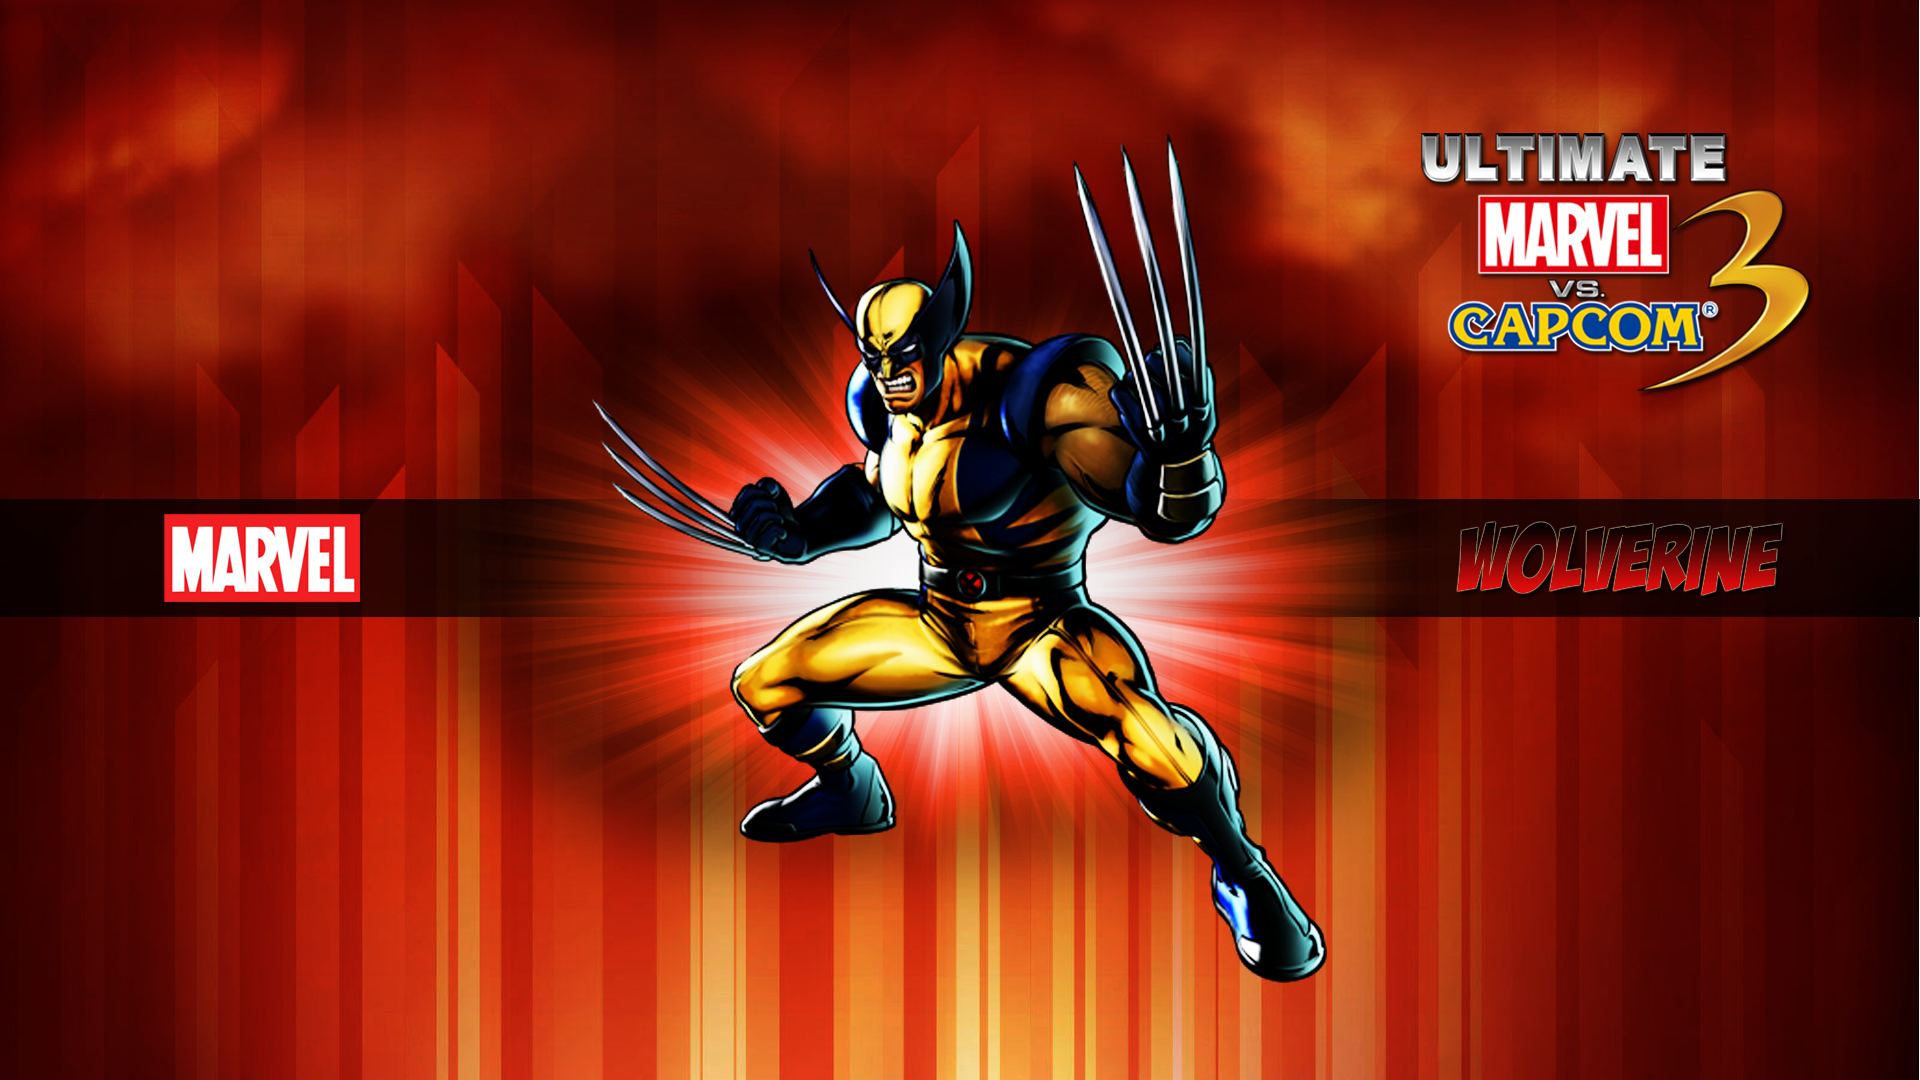 General 1920x1080 Marvel vs. Capcom 3 Wolverine video games video game warriors Ultimate Marvel VS. Capcom 3 superhero Marvel Comics